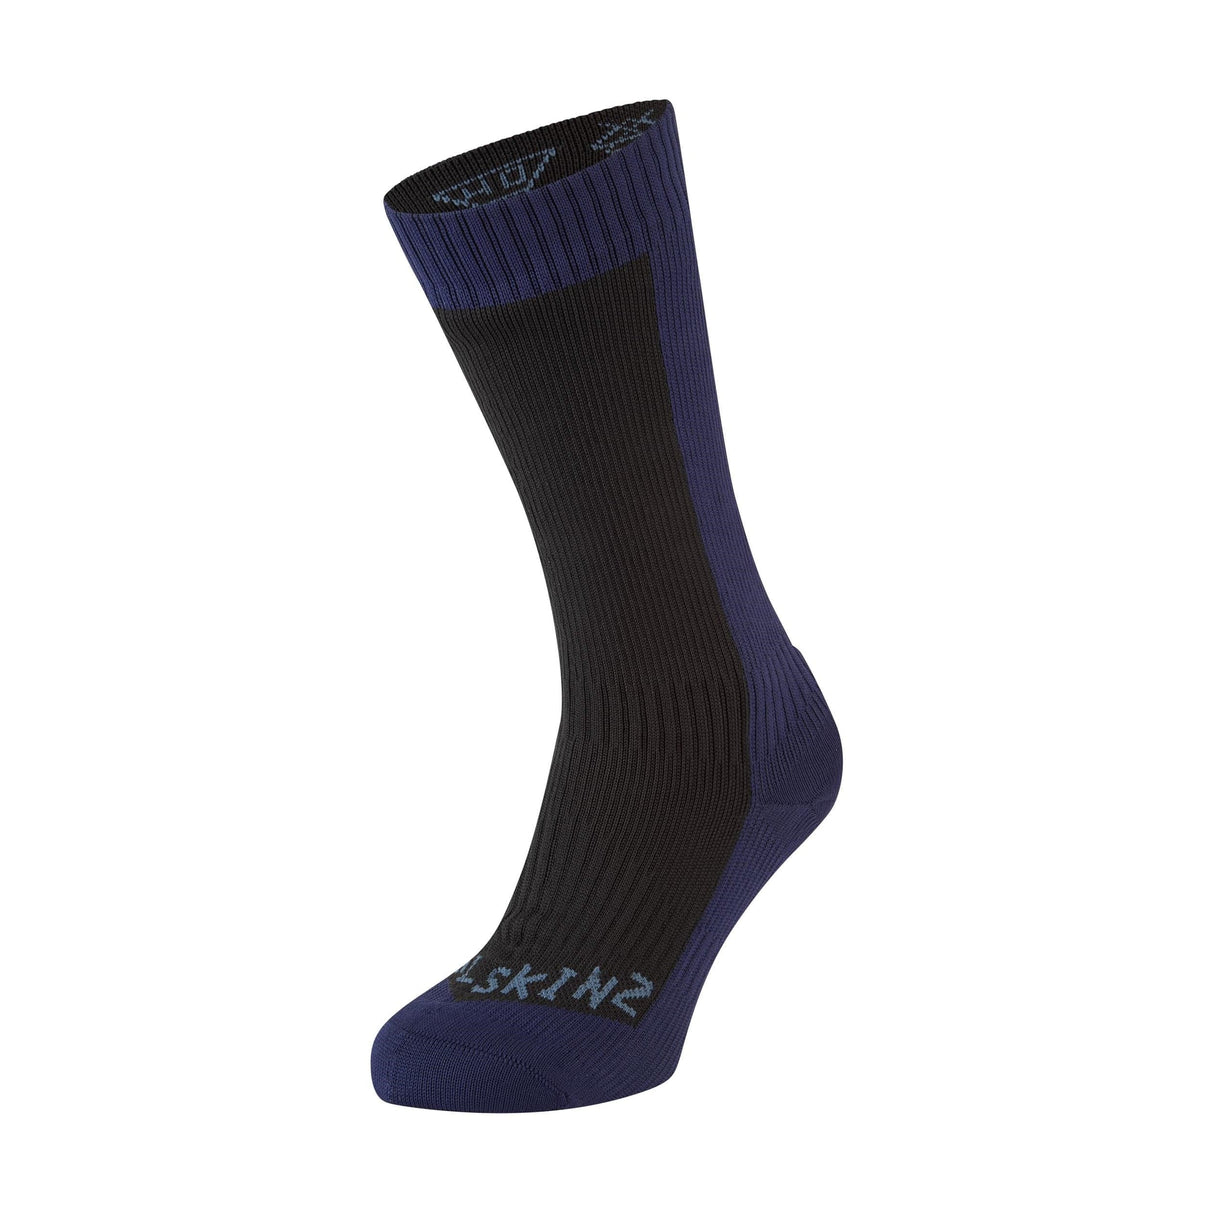 Sealskinz Starston Waterproof Cold Weather Mid Socks  -  Small / Black/Navy Blue